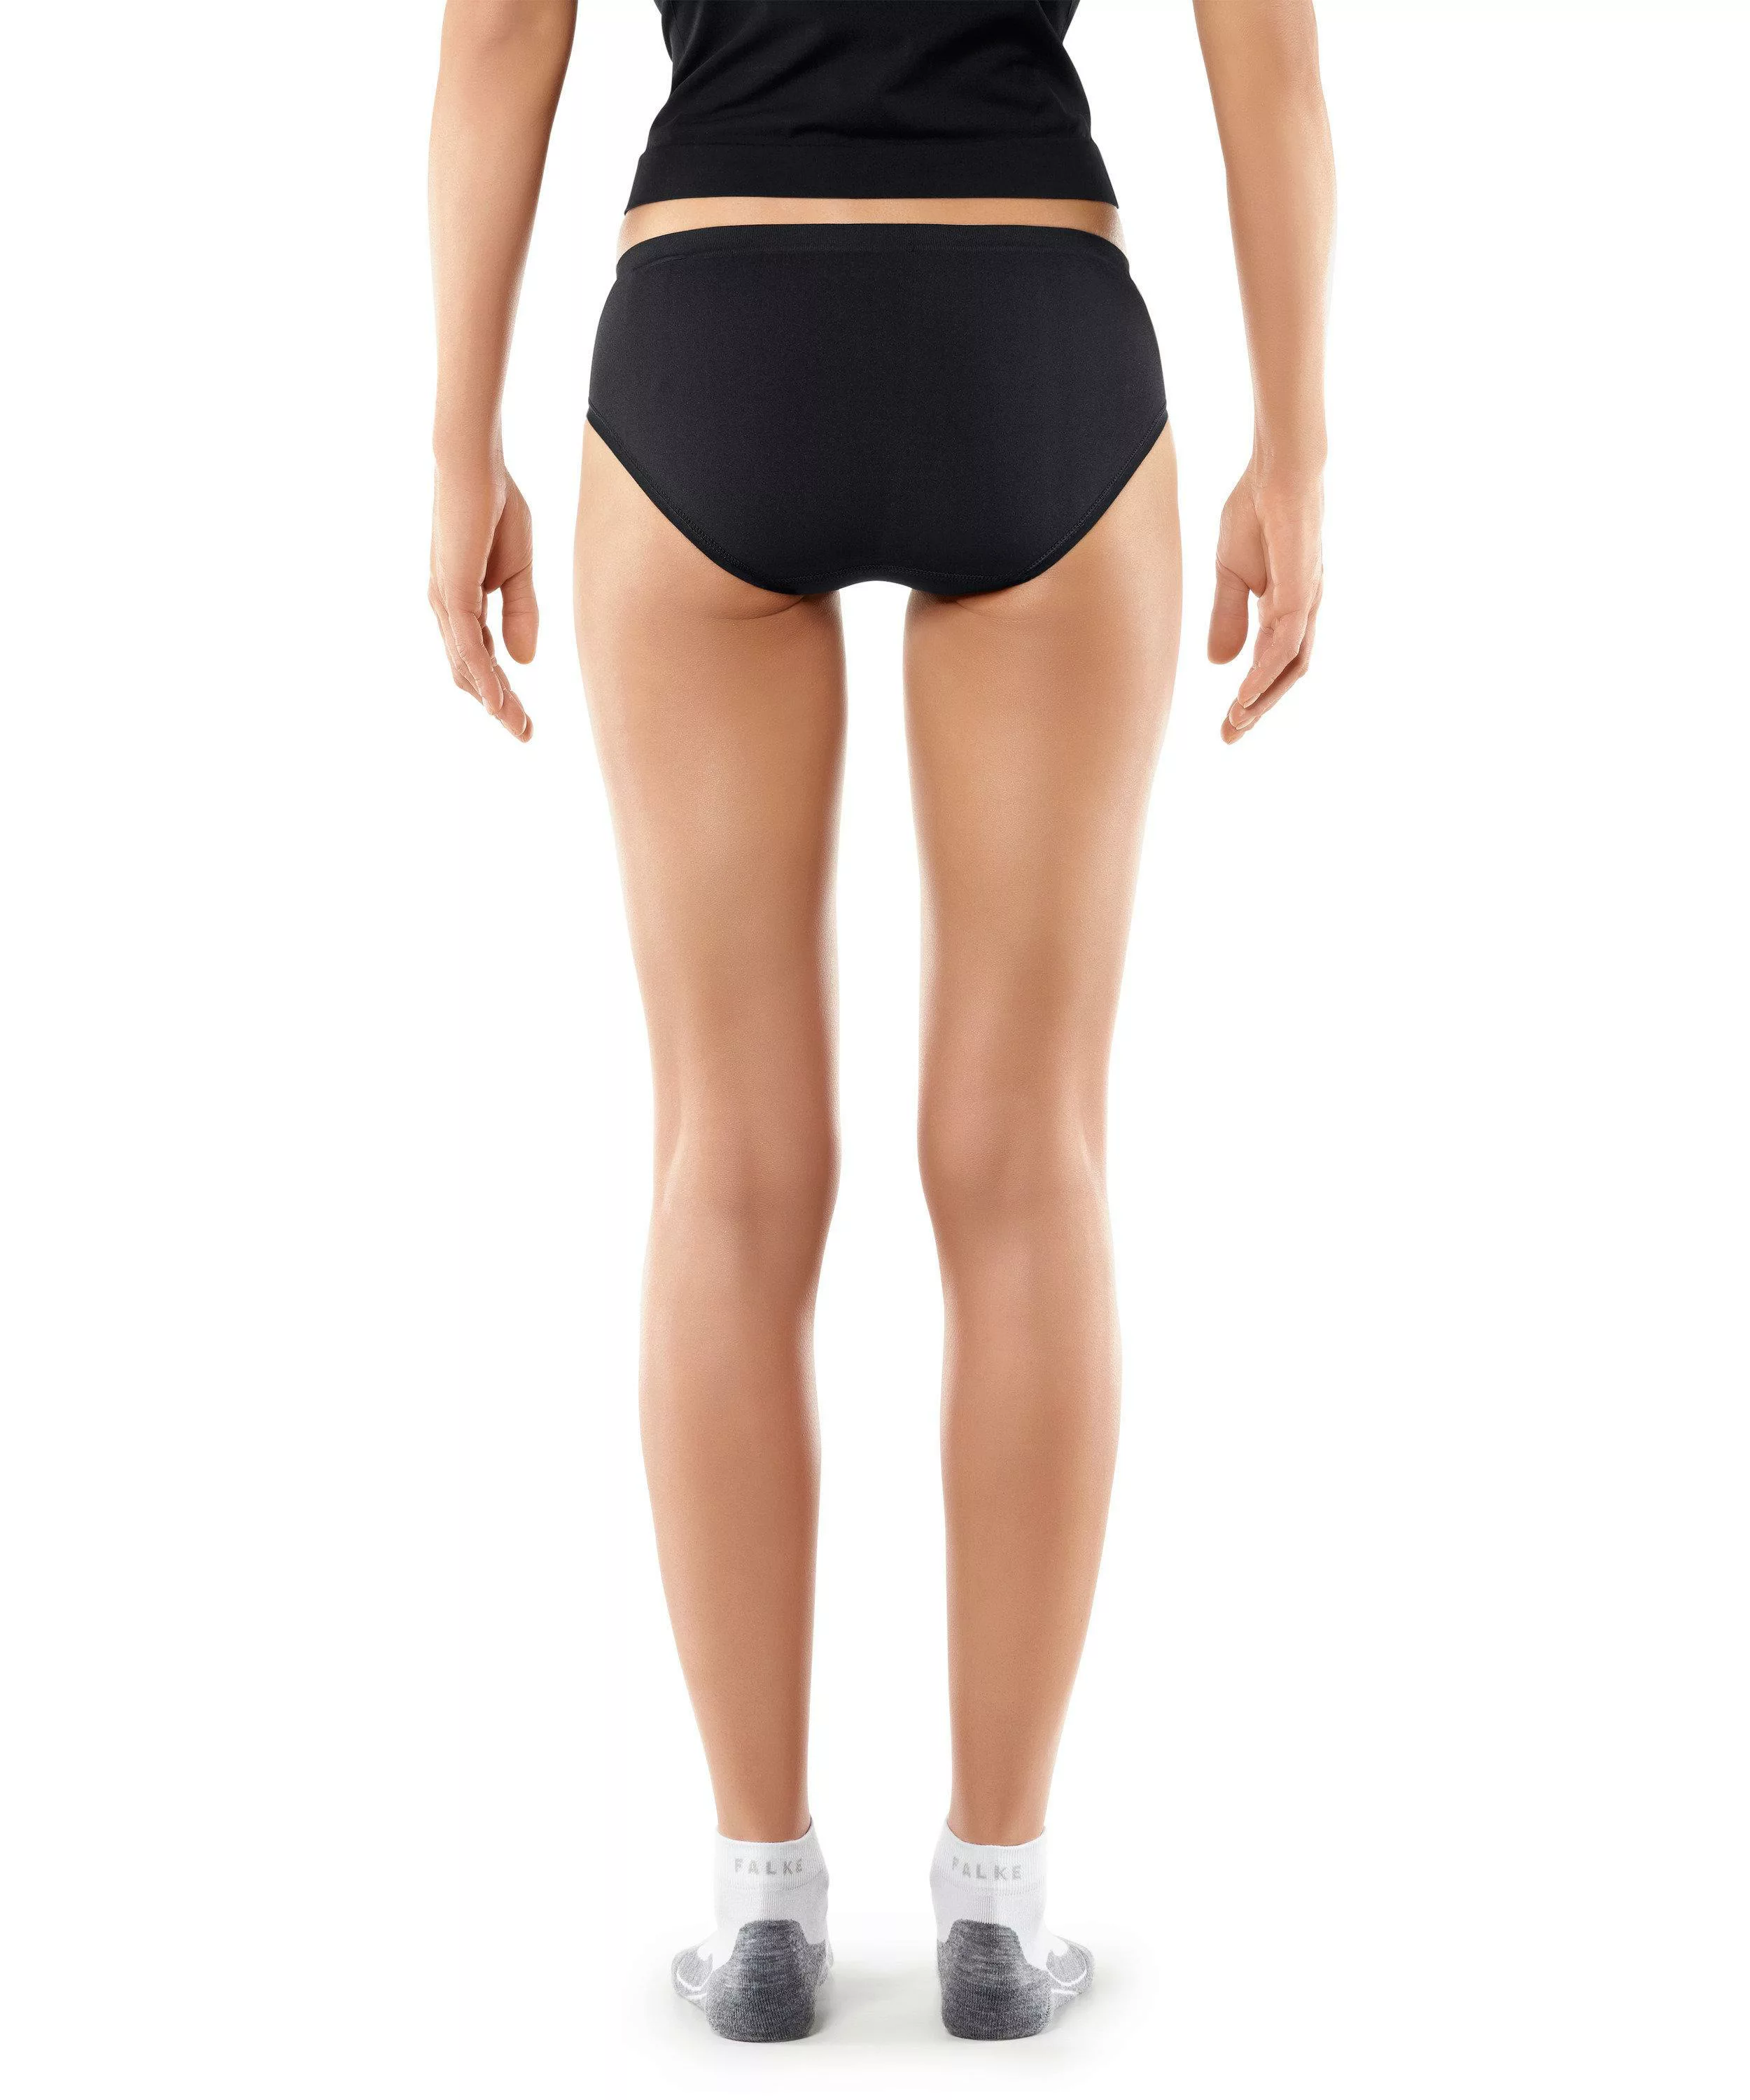 FALKE Damen Panties Cool, XL, Schwarz, Uni, 33245-300005 günstig online kaufen